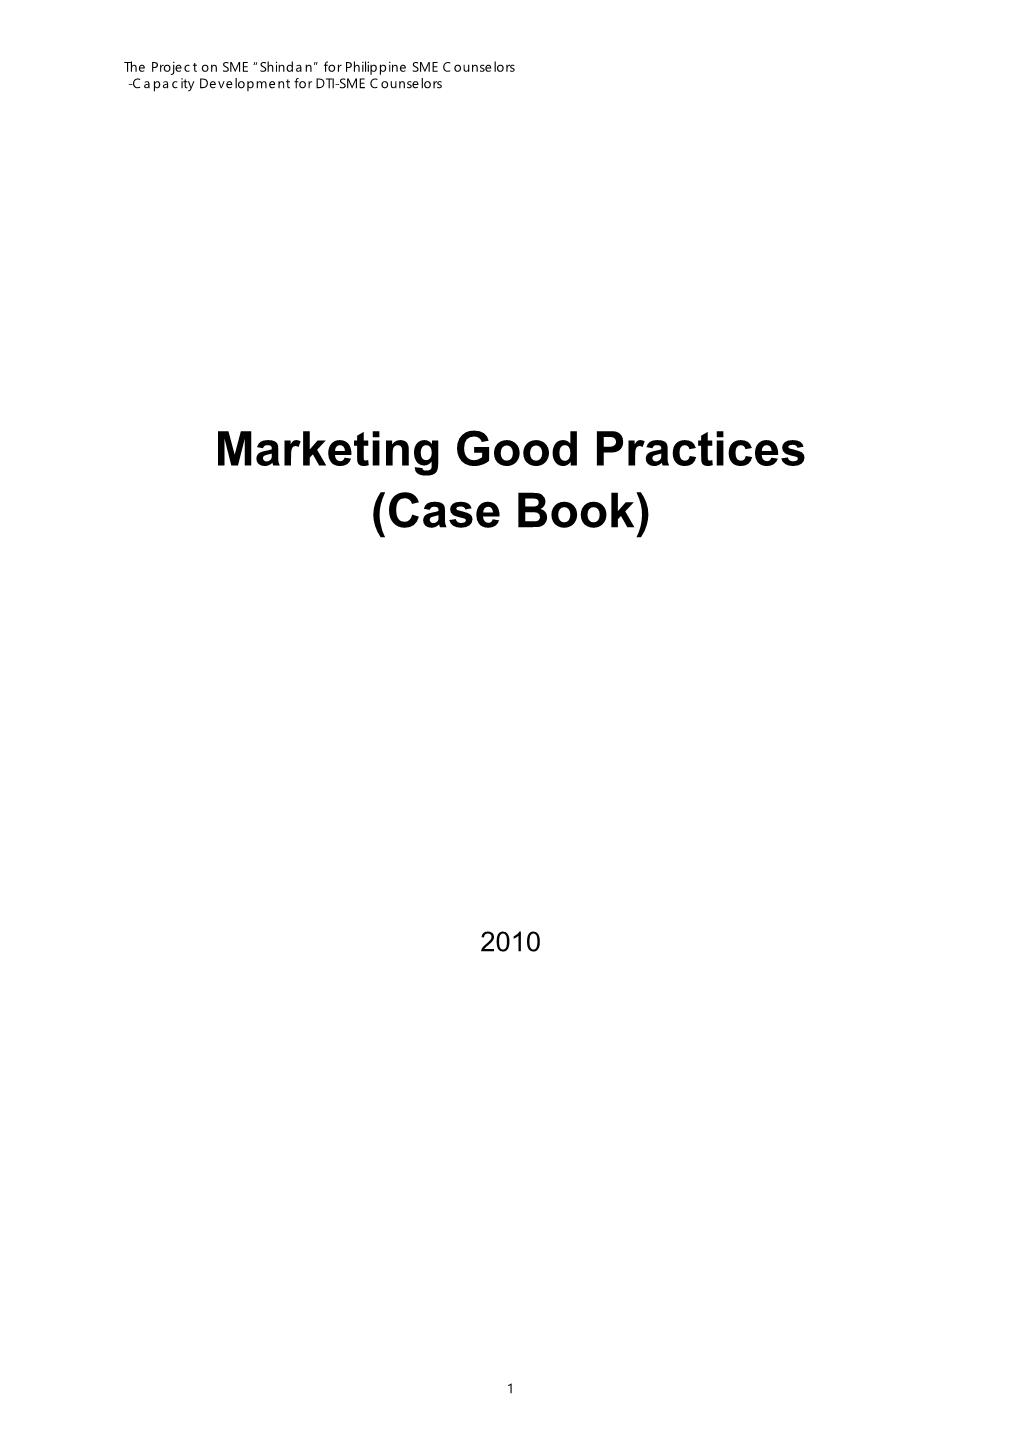 Marketing Good Practices (Case Book)